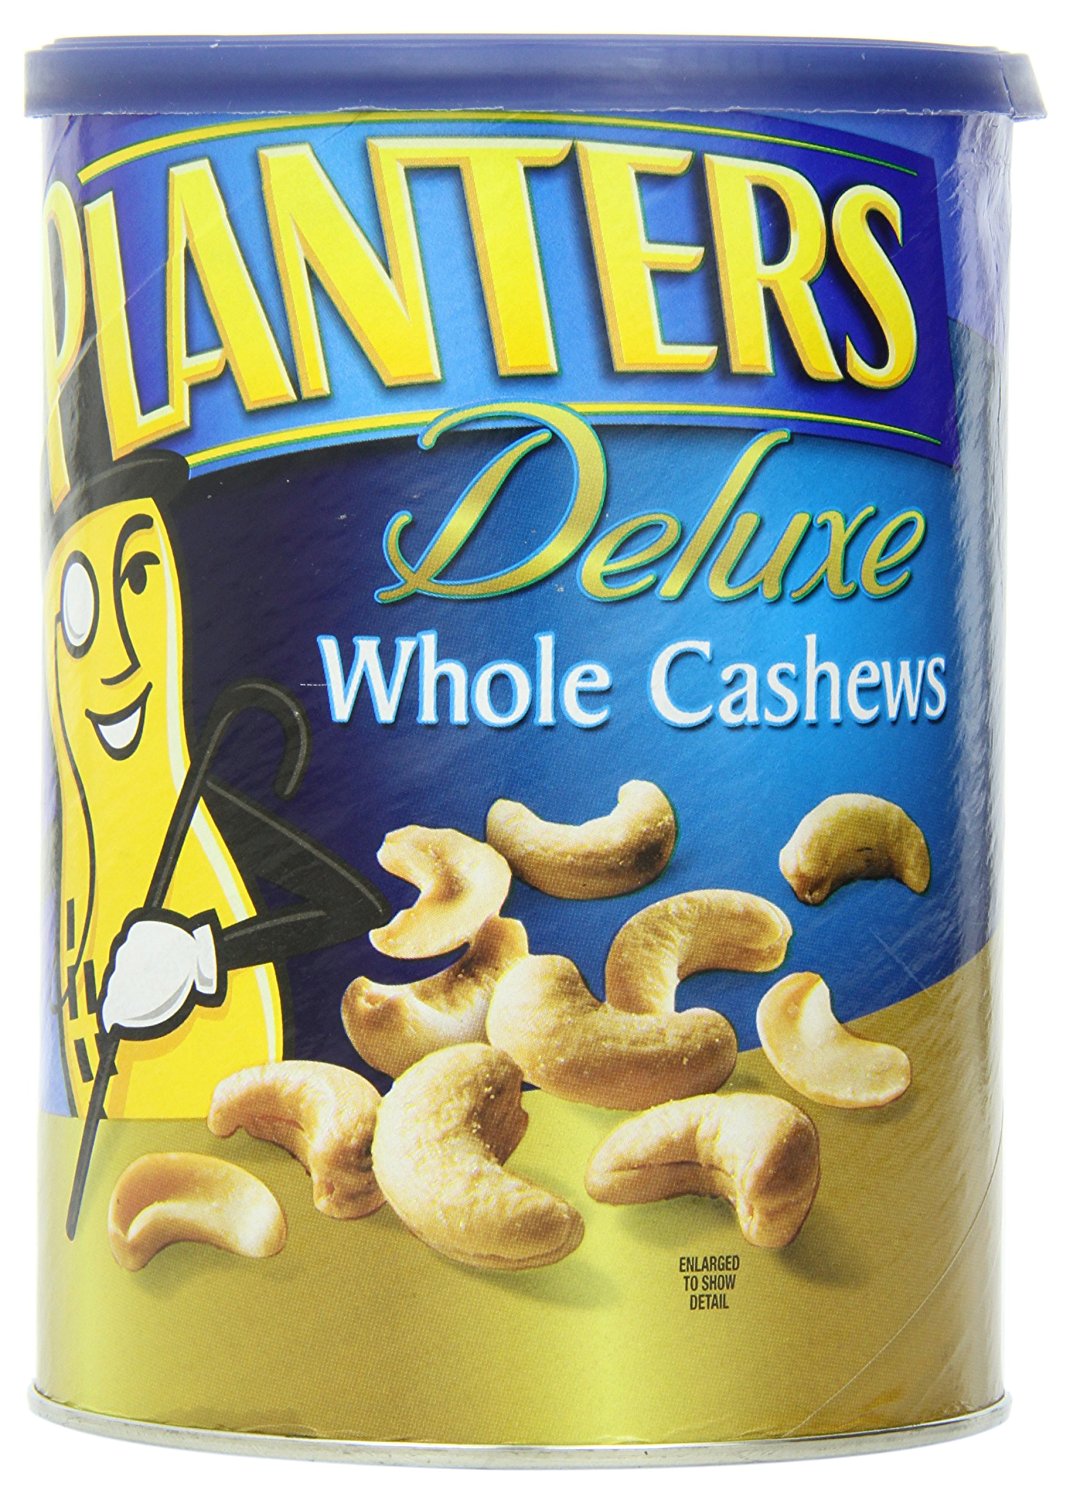 18.25oz. Planters Deluxe Whole Cashews  $6 + Free S/H